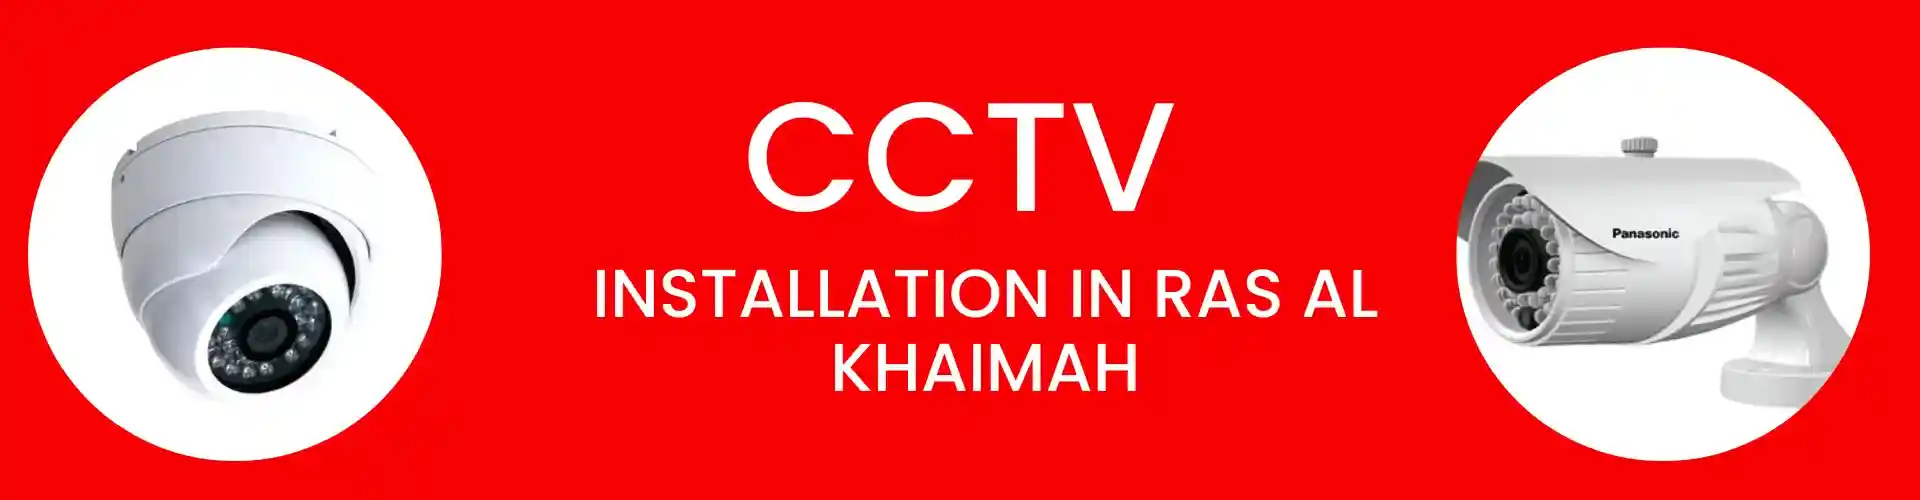 CCTV installation service in Ras Al khaimah